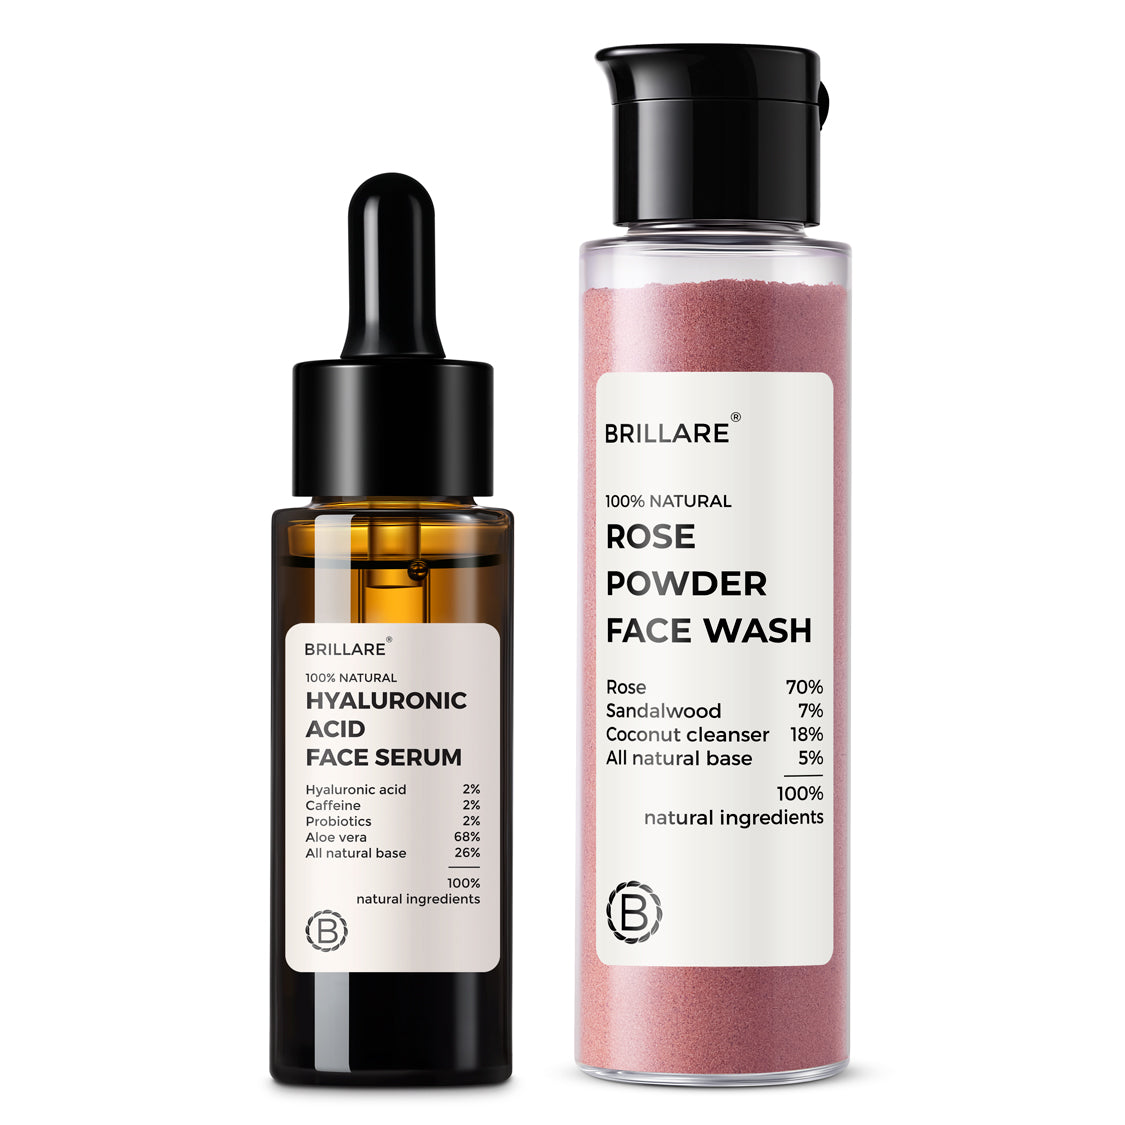 2% Hyaluronic Acid Face Serum & Rose Powder Face Wash (30g) Combo For youthful Skin